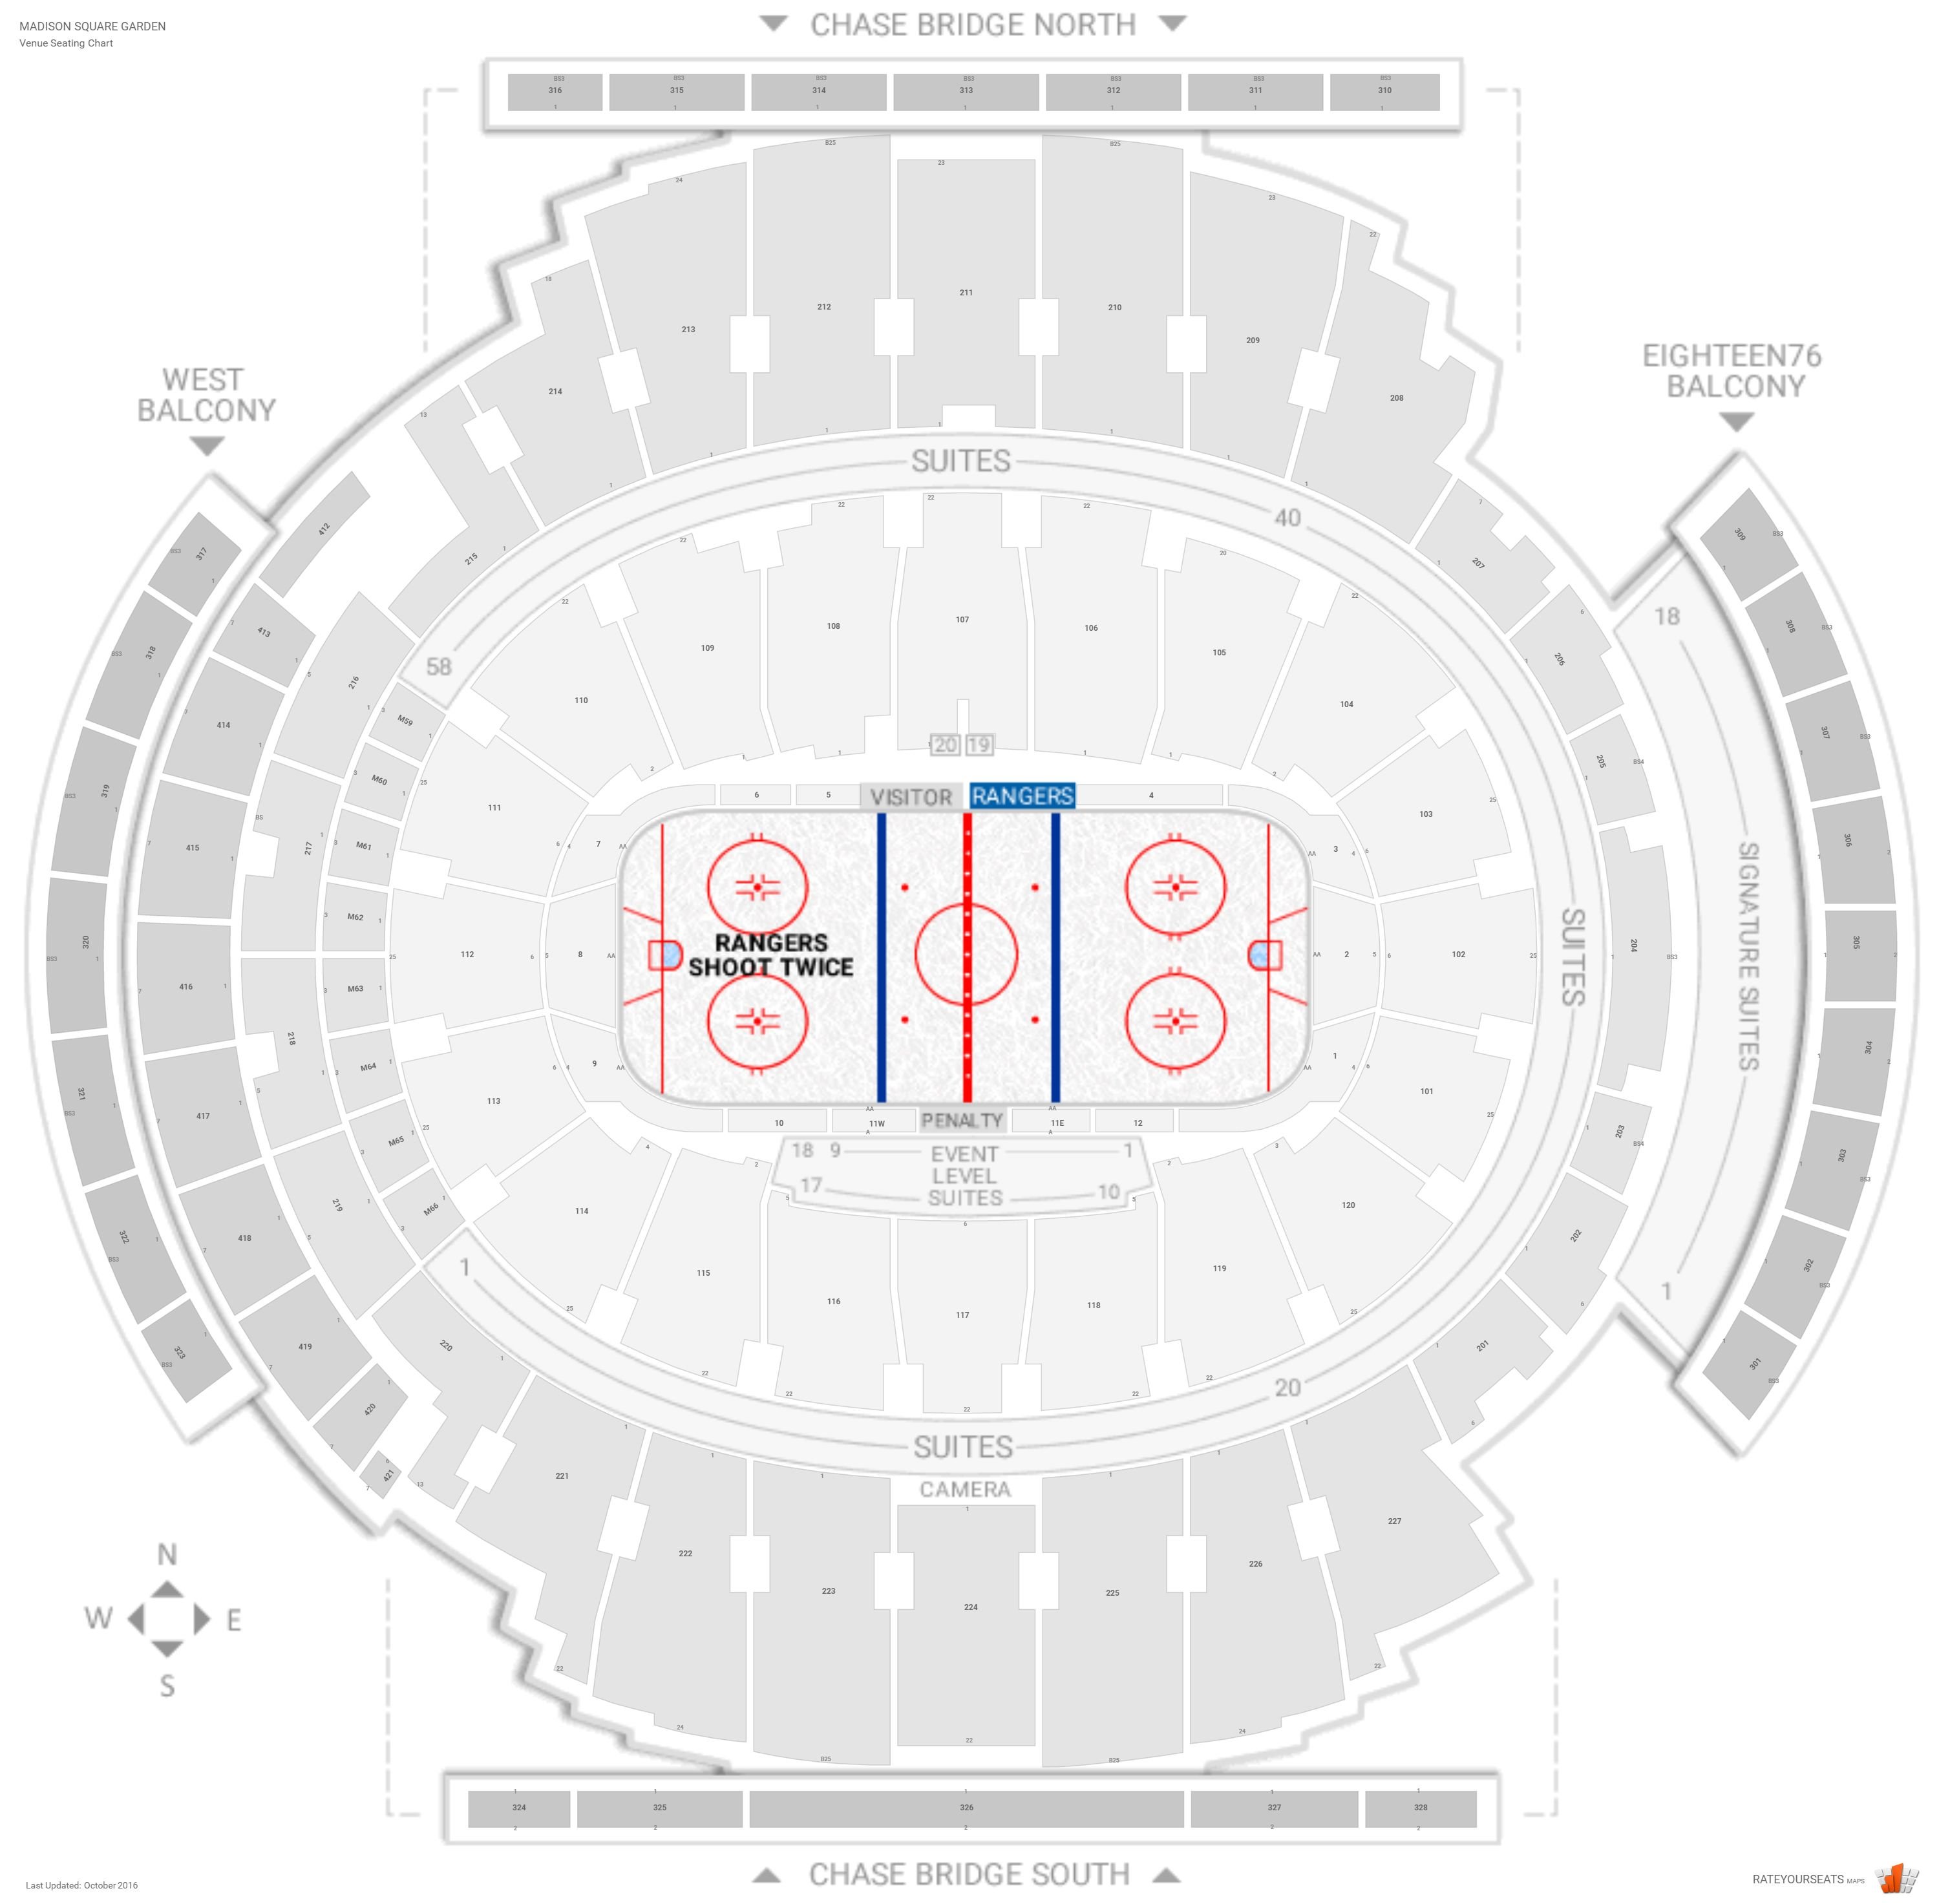 Square Garden Seating Chart Hockey